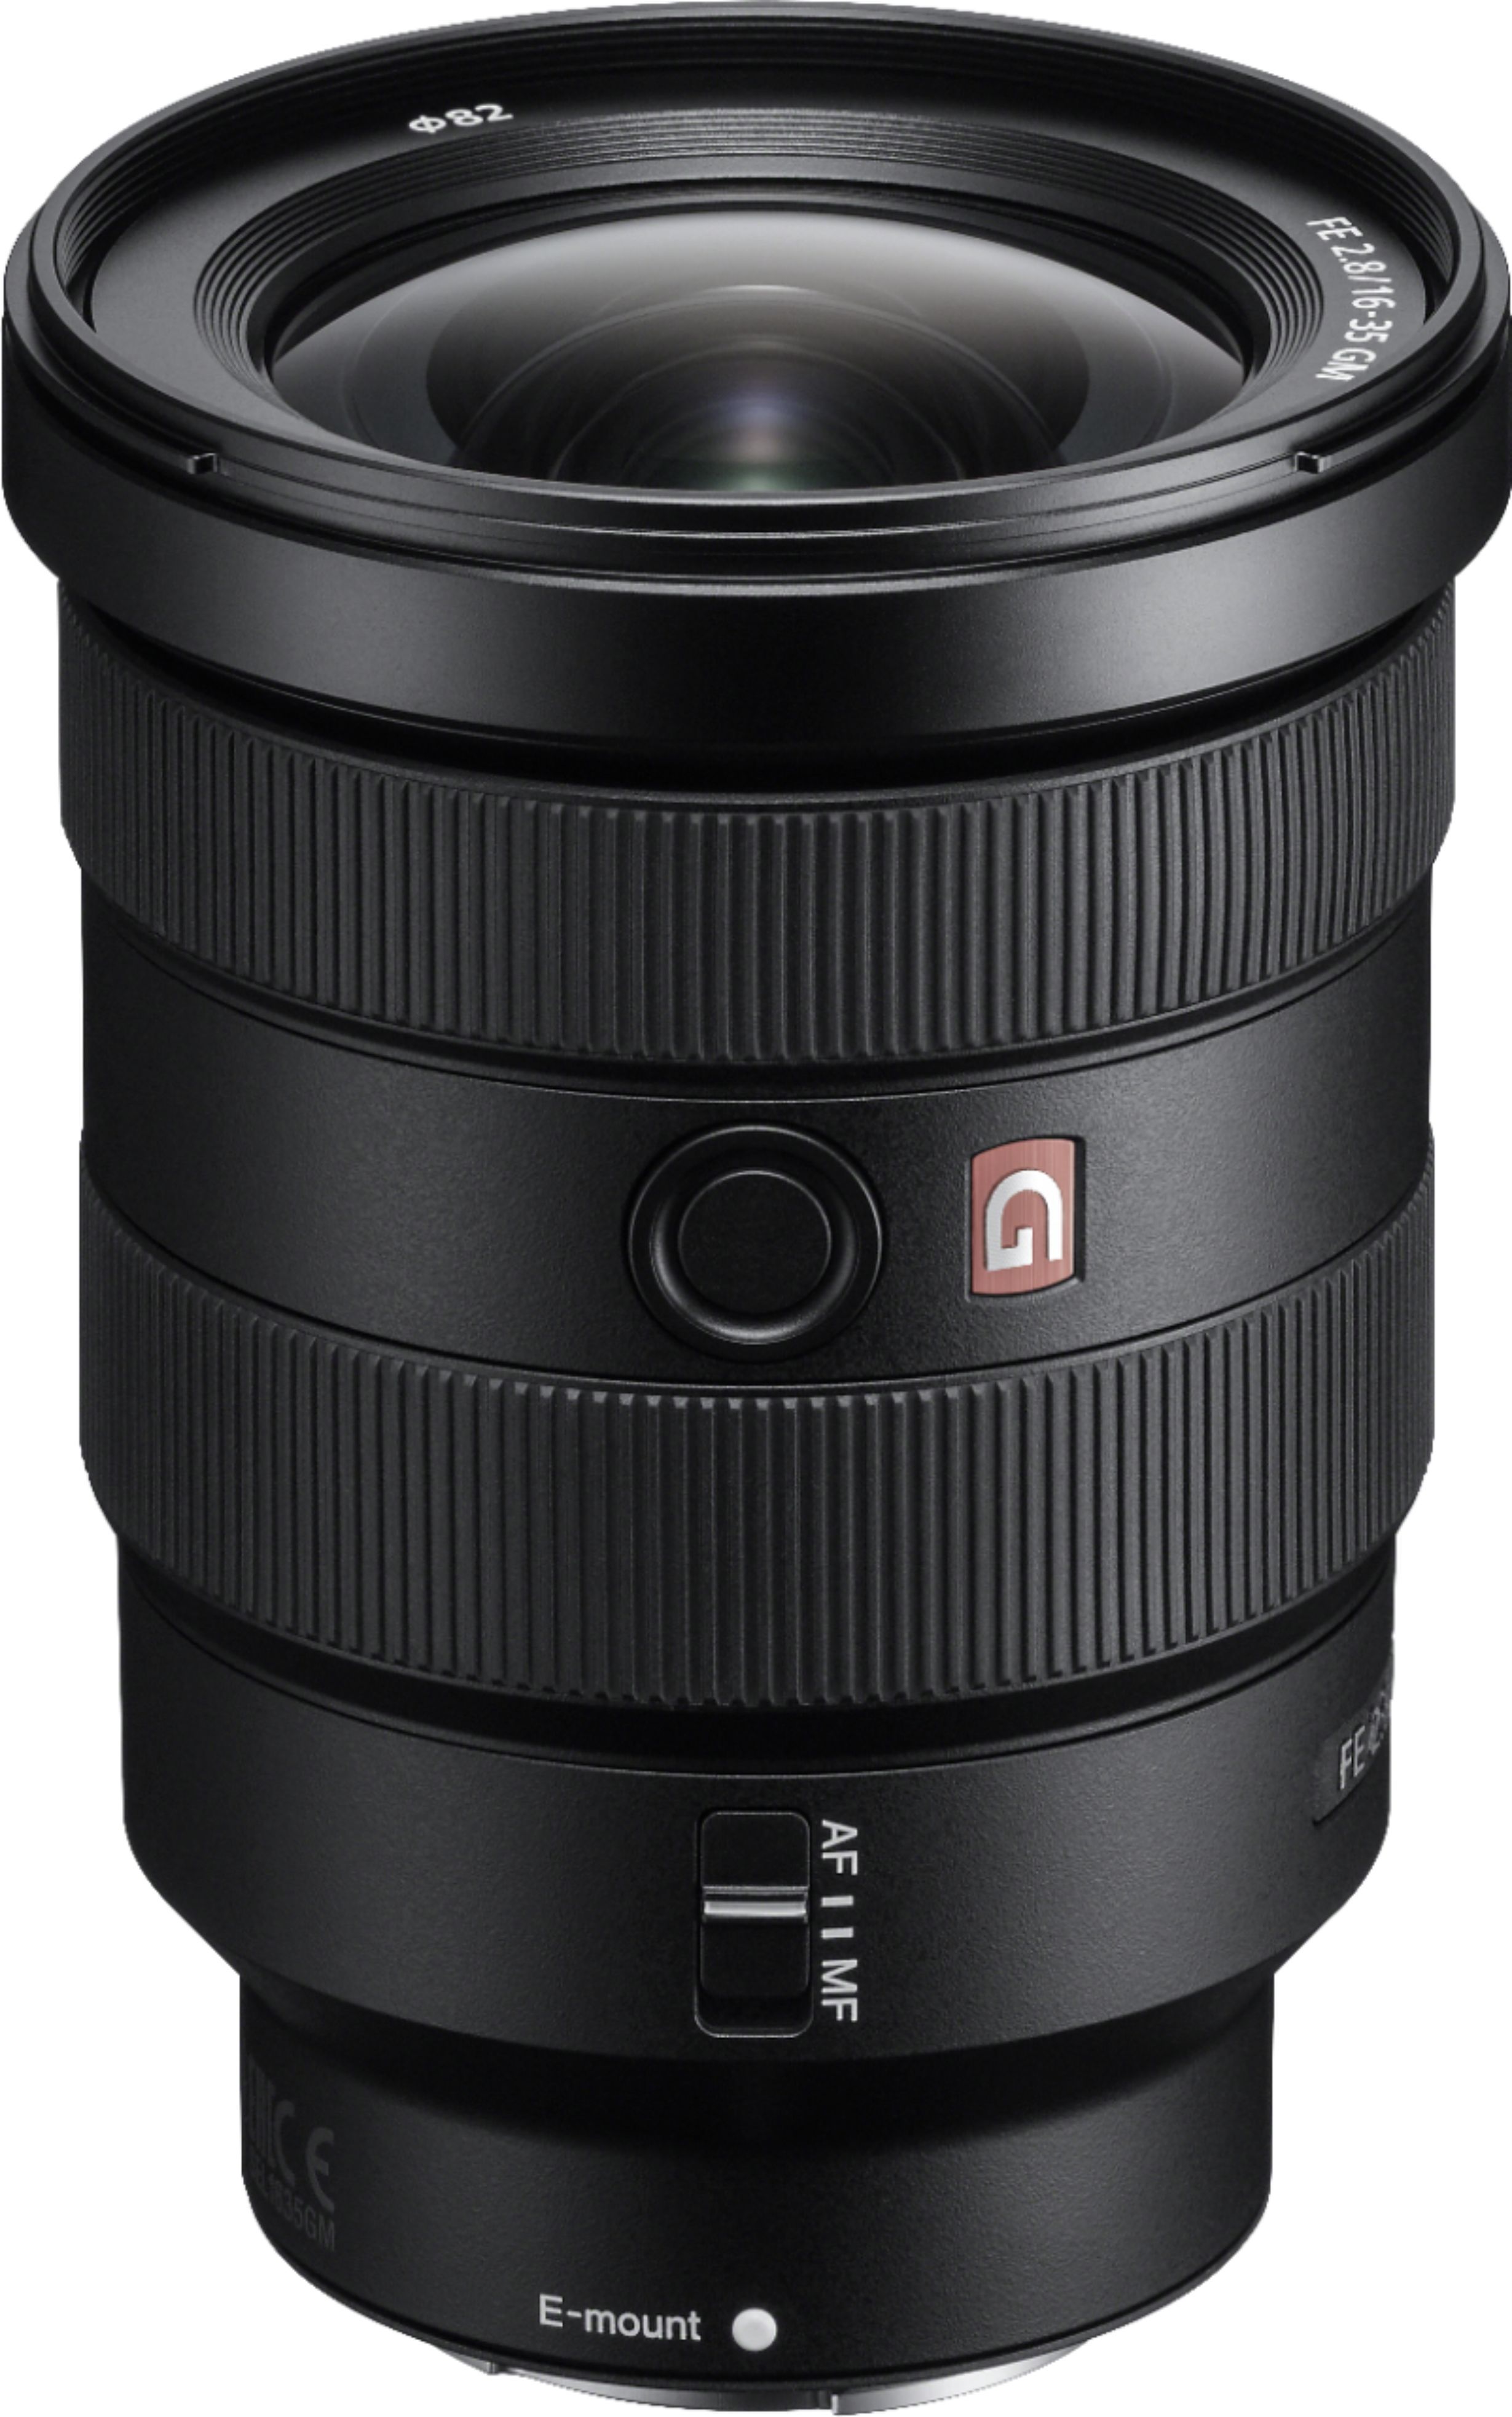 Sony G Master FE 16-35mm f/2.8 GM Wide Angle Zoom Lens for E-mount Cameras Black SEL1635GM - Best... | Best Buy U.S.